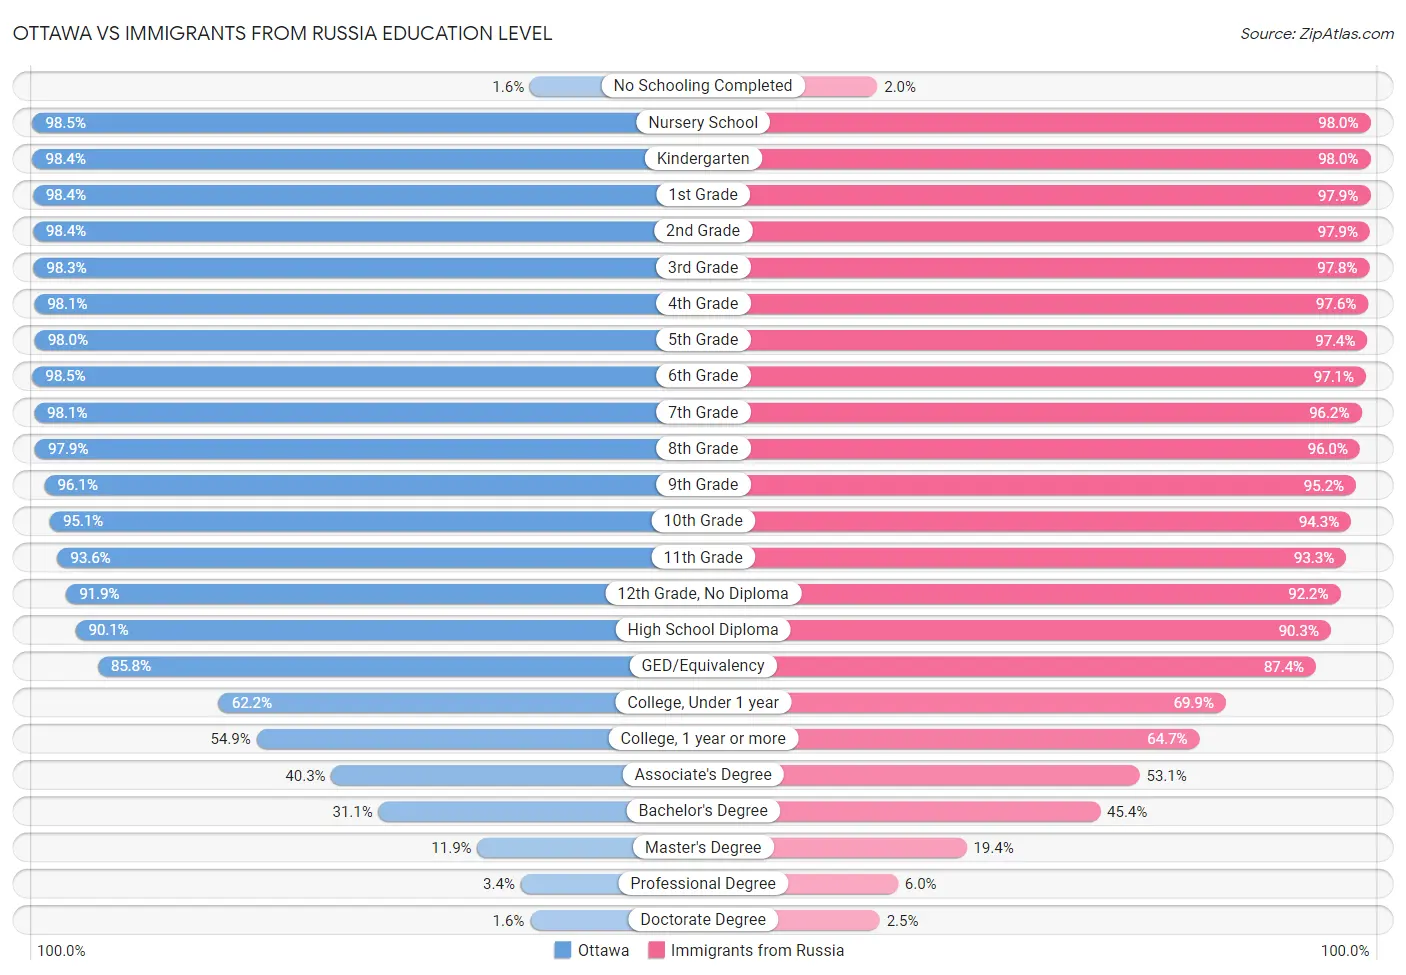 Ottawa vs Immigrants from Russia Education Level